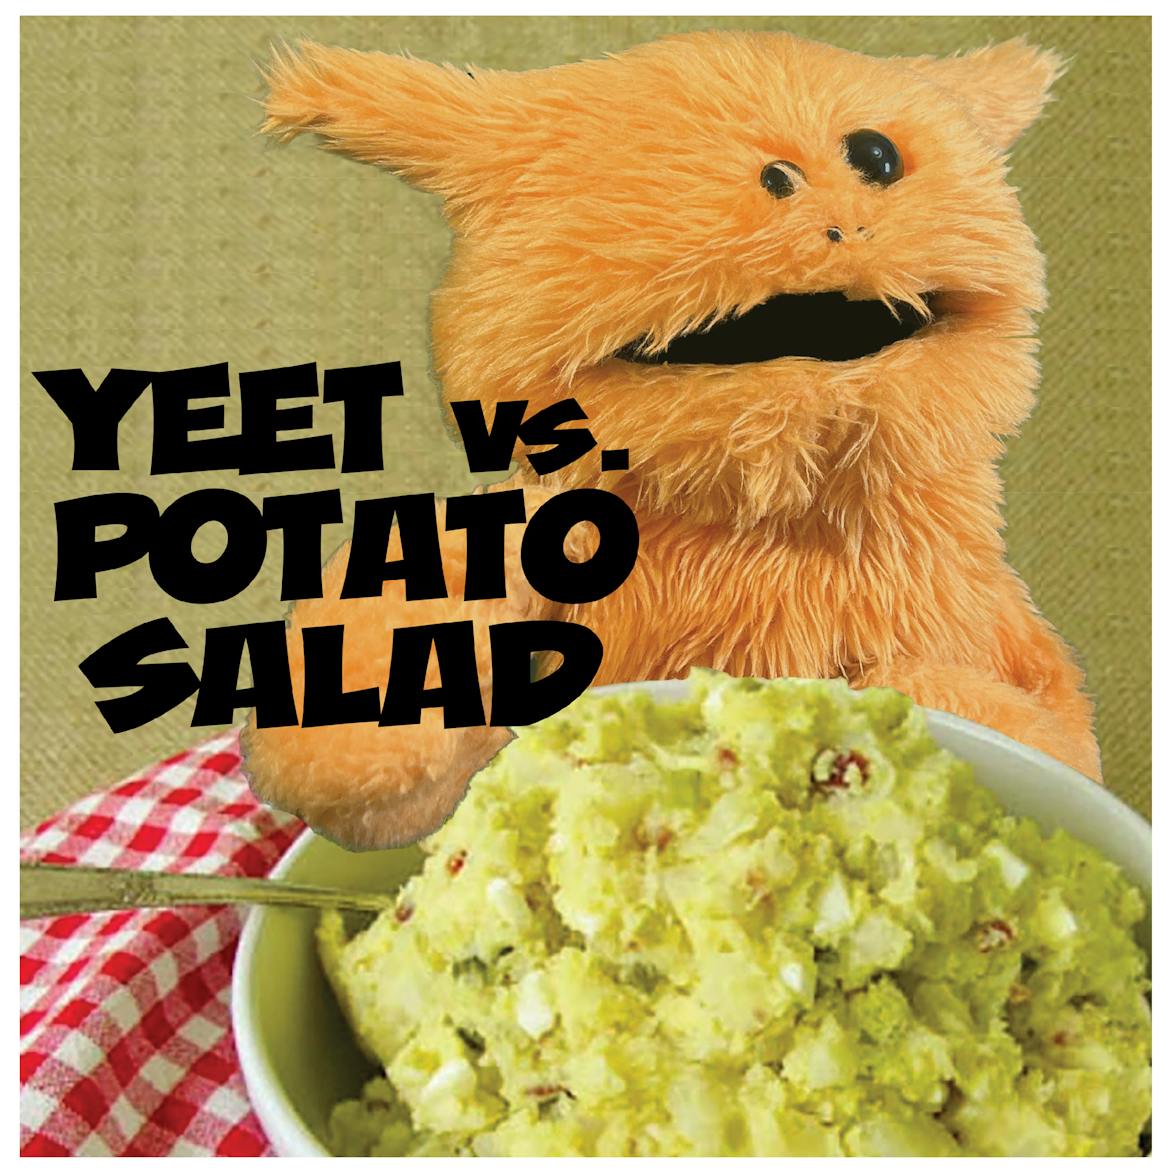 Yeet makes Potato Salad